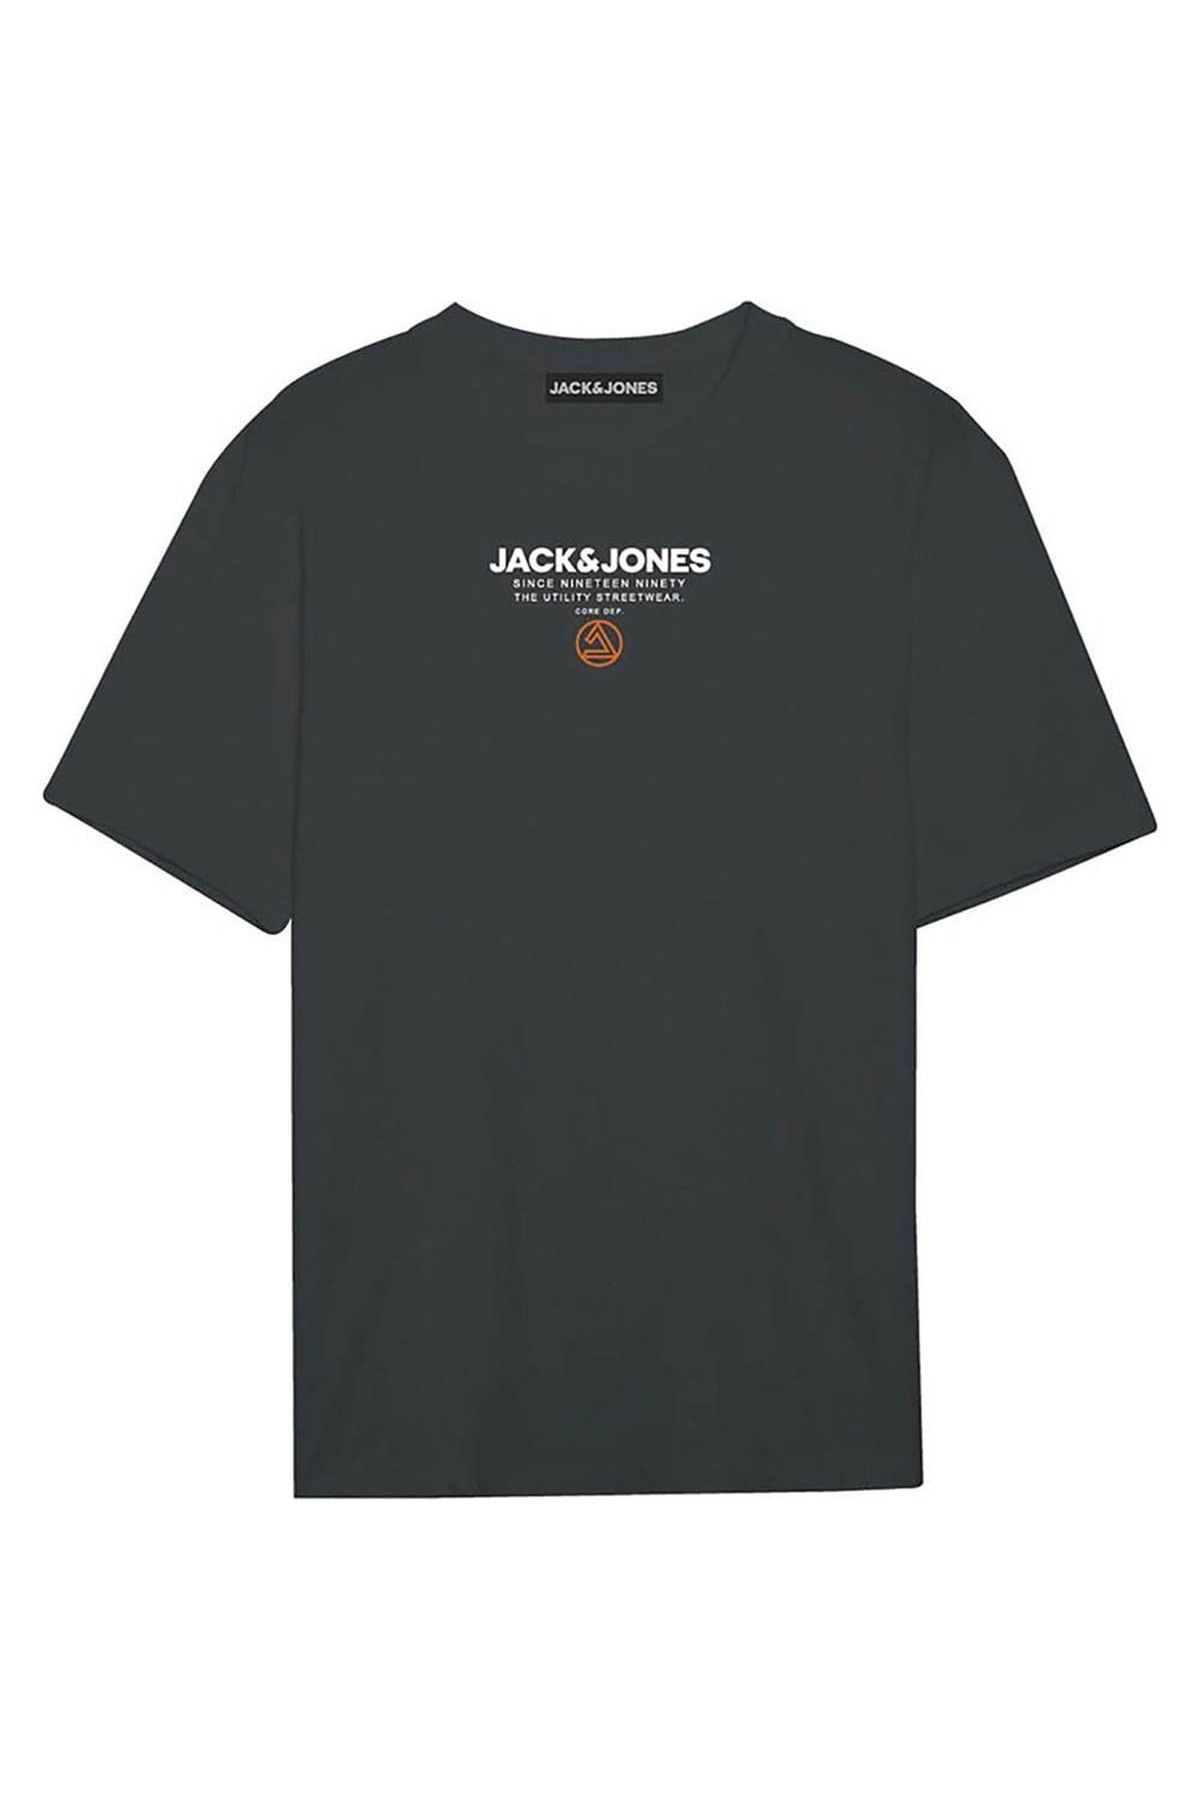 Jack & Jones Kadın T-shirt Siyah 12256163